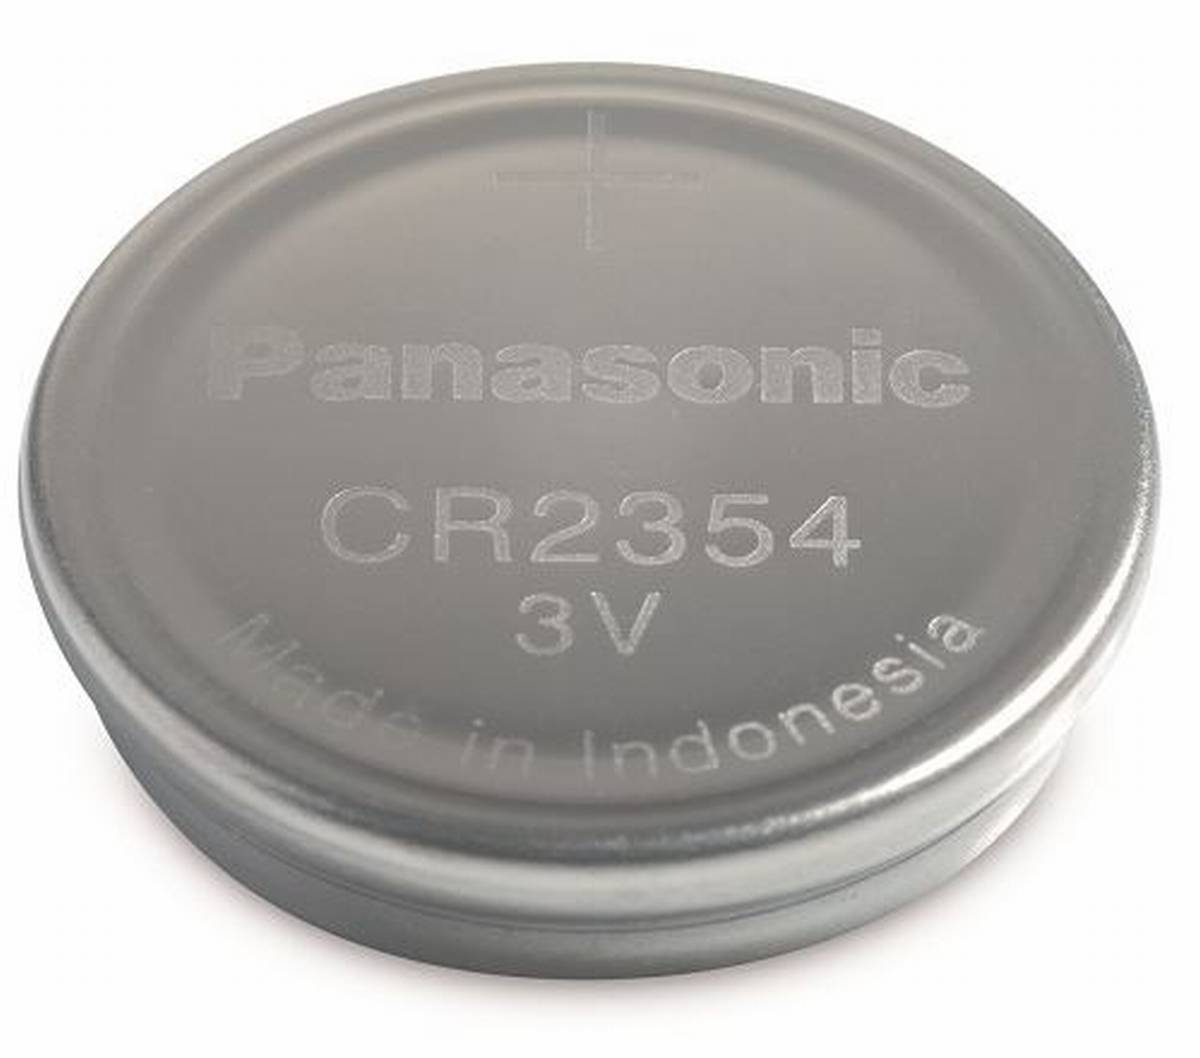 Panasonic CR2354 batteria al litio 200 pezzi PU